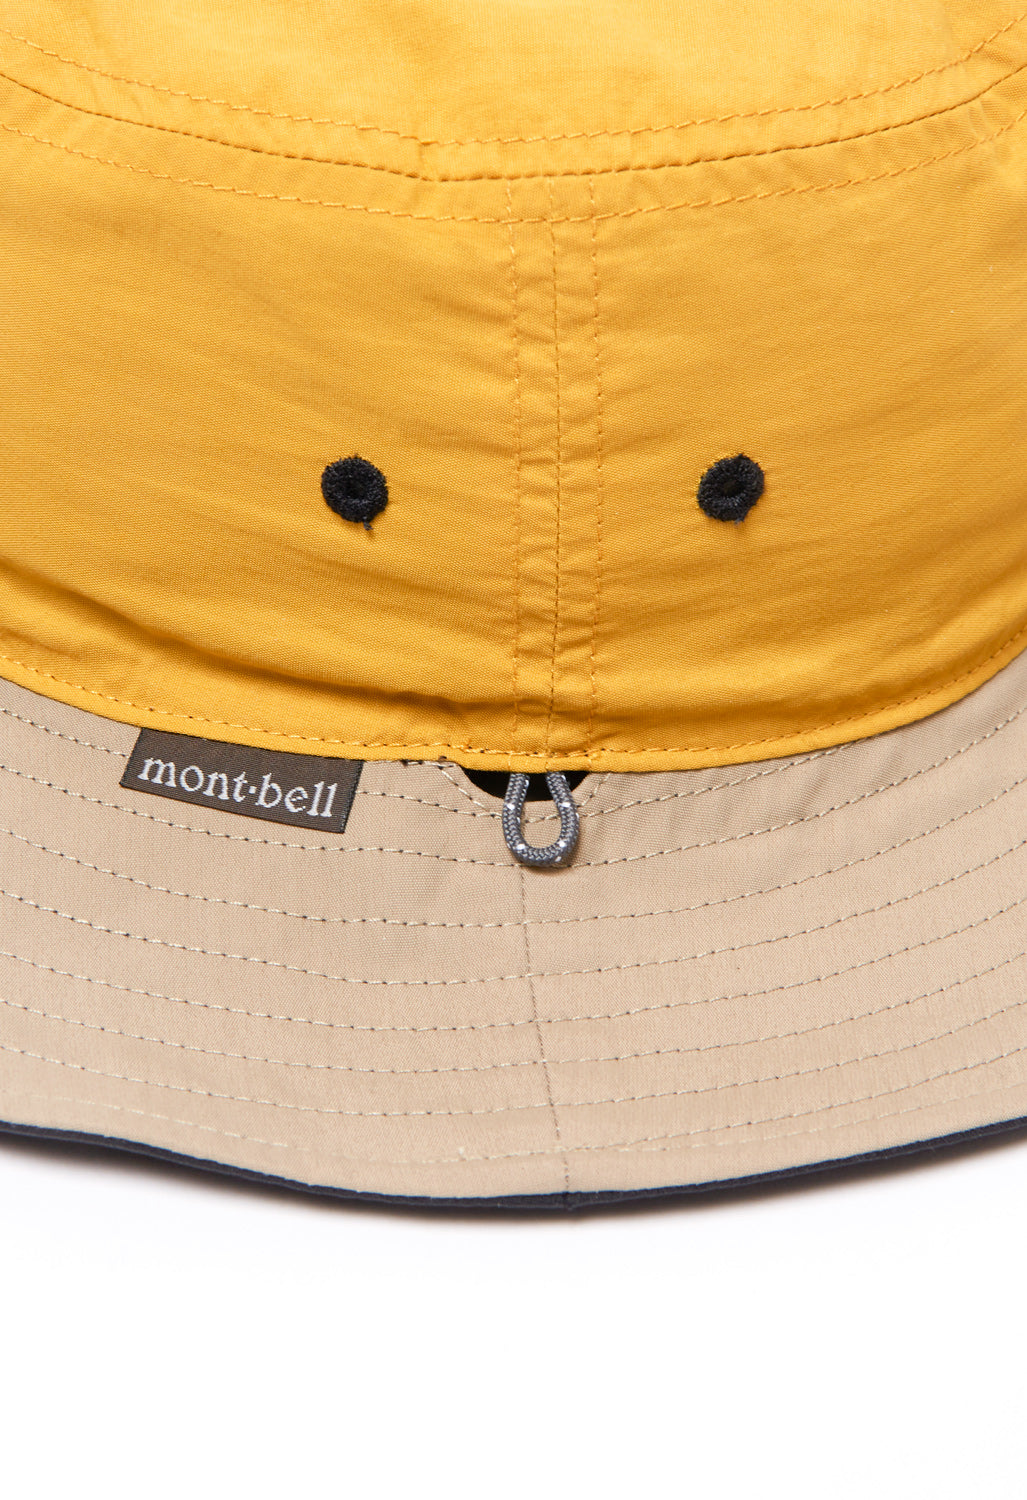 Montbell Reversible Hat - Black